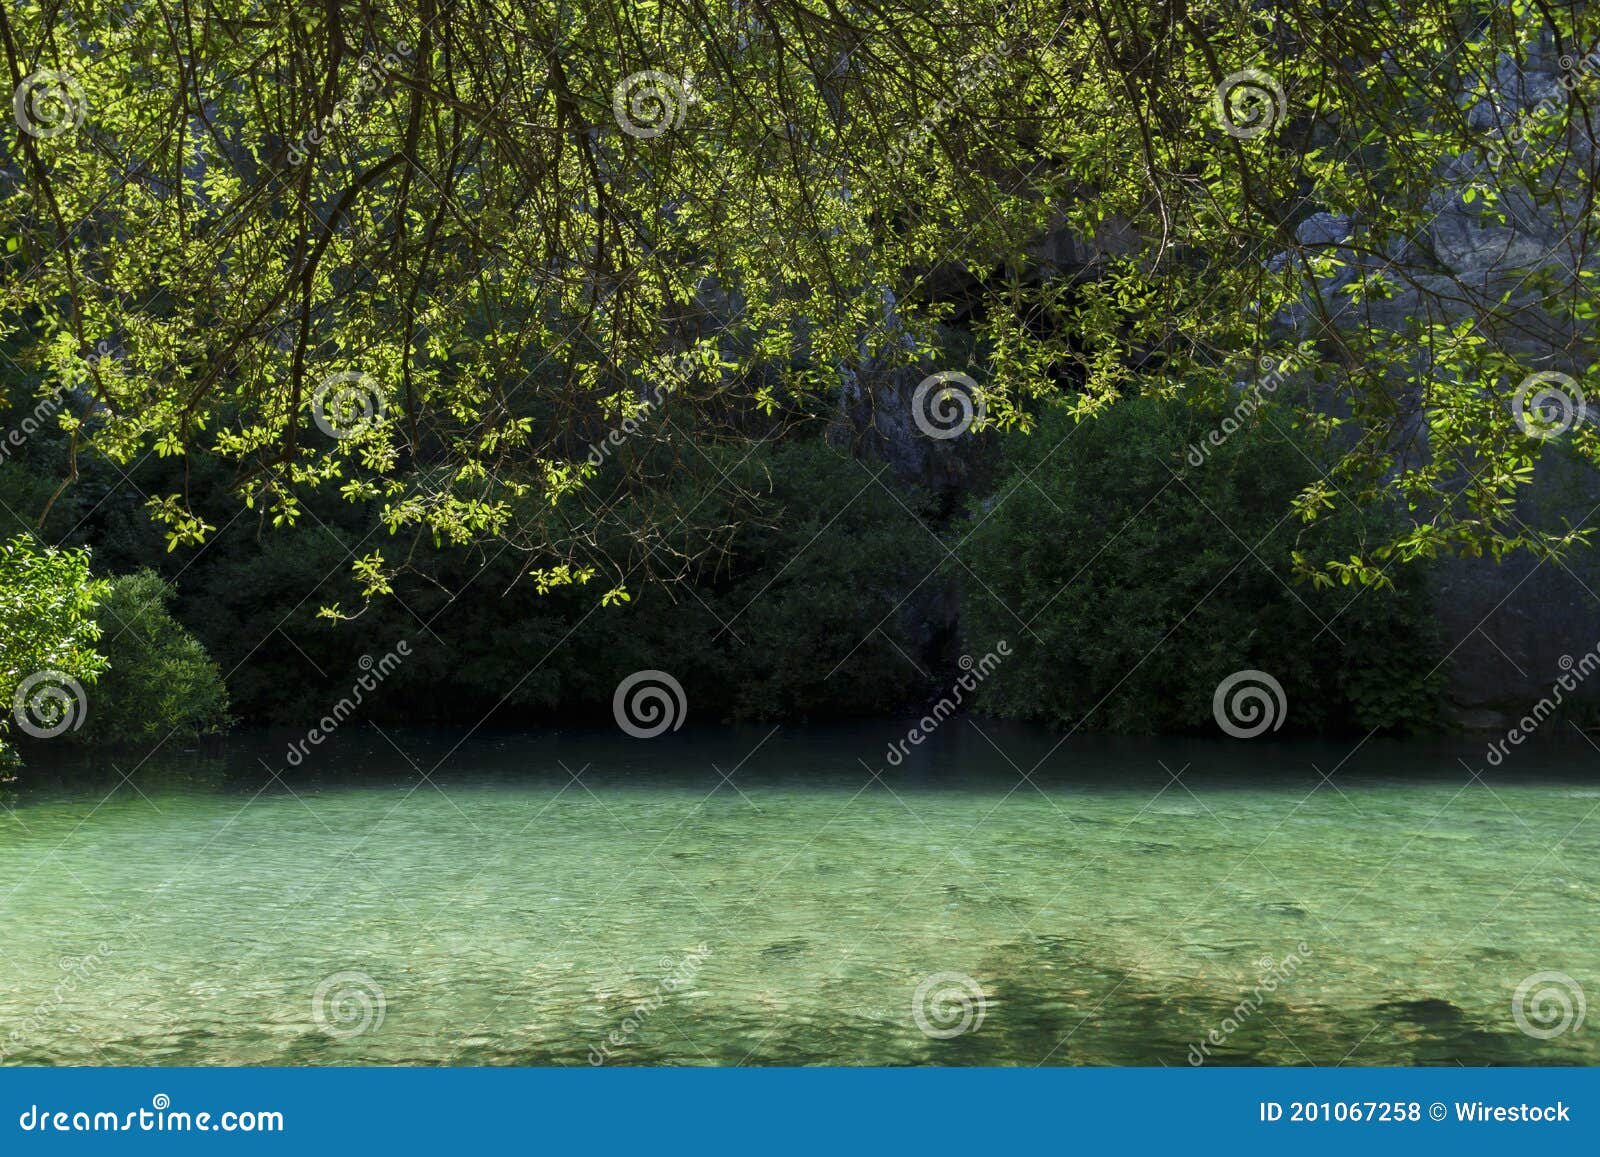 beautiful clear lake by the trees captured in la cueva del gato, spain